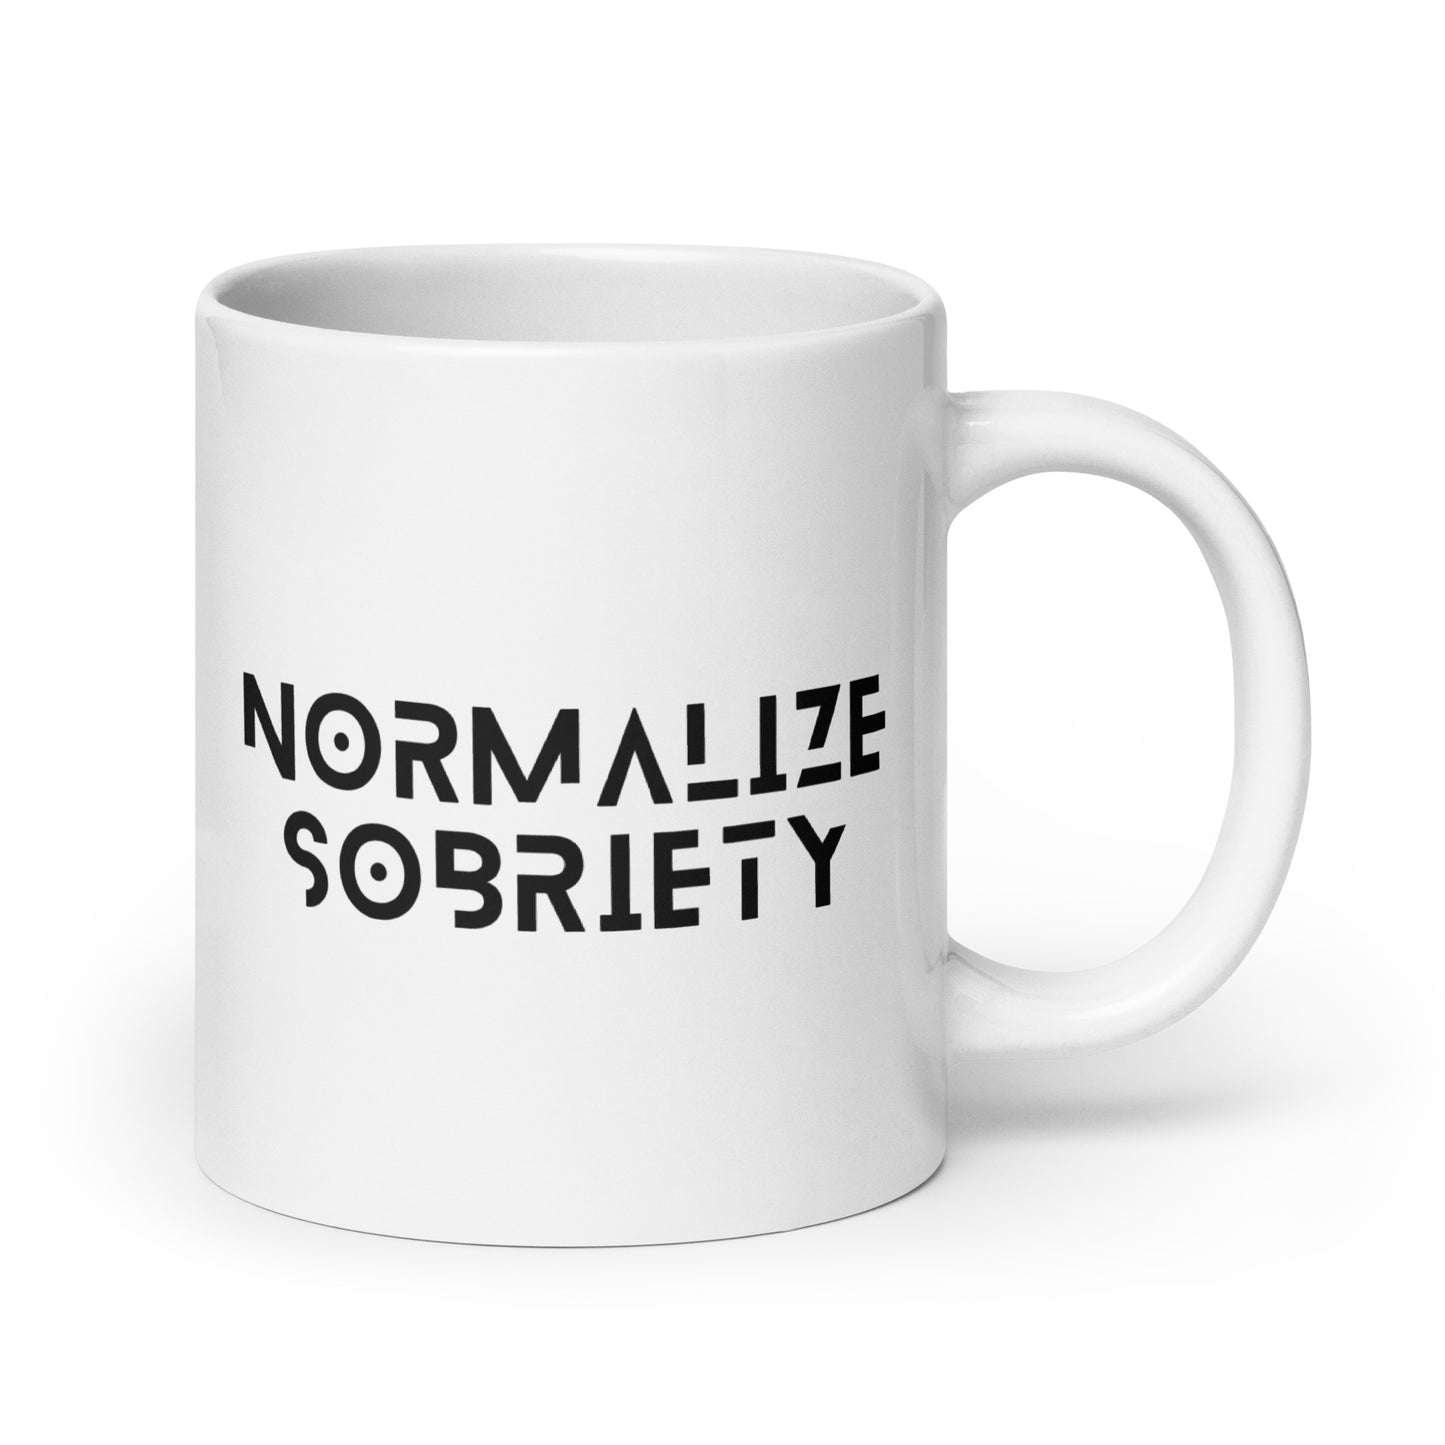 Normalize Sobriety Mug